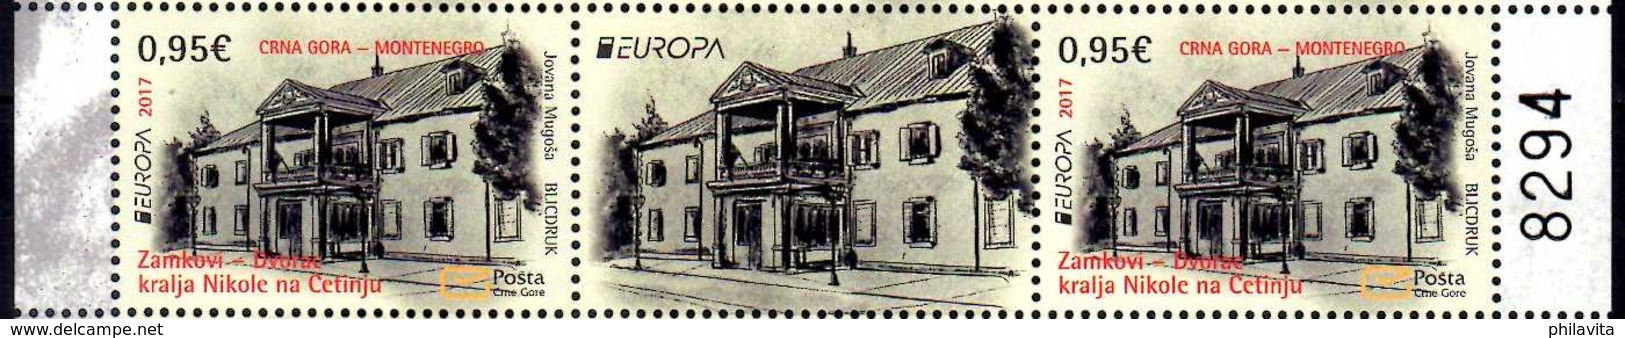 2017 Montenegro Europa CEPT Castles 1v Gutter Strip + Sheetlet Coupon MNH** MiNr. 404 - 2017